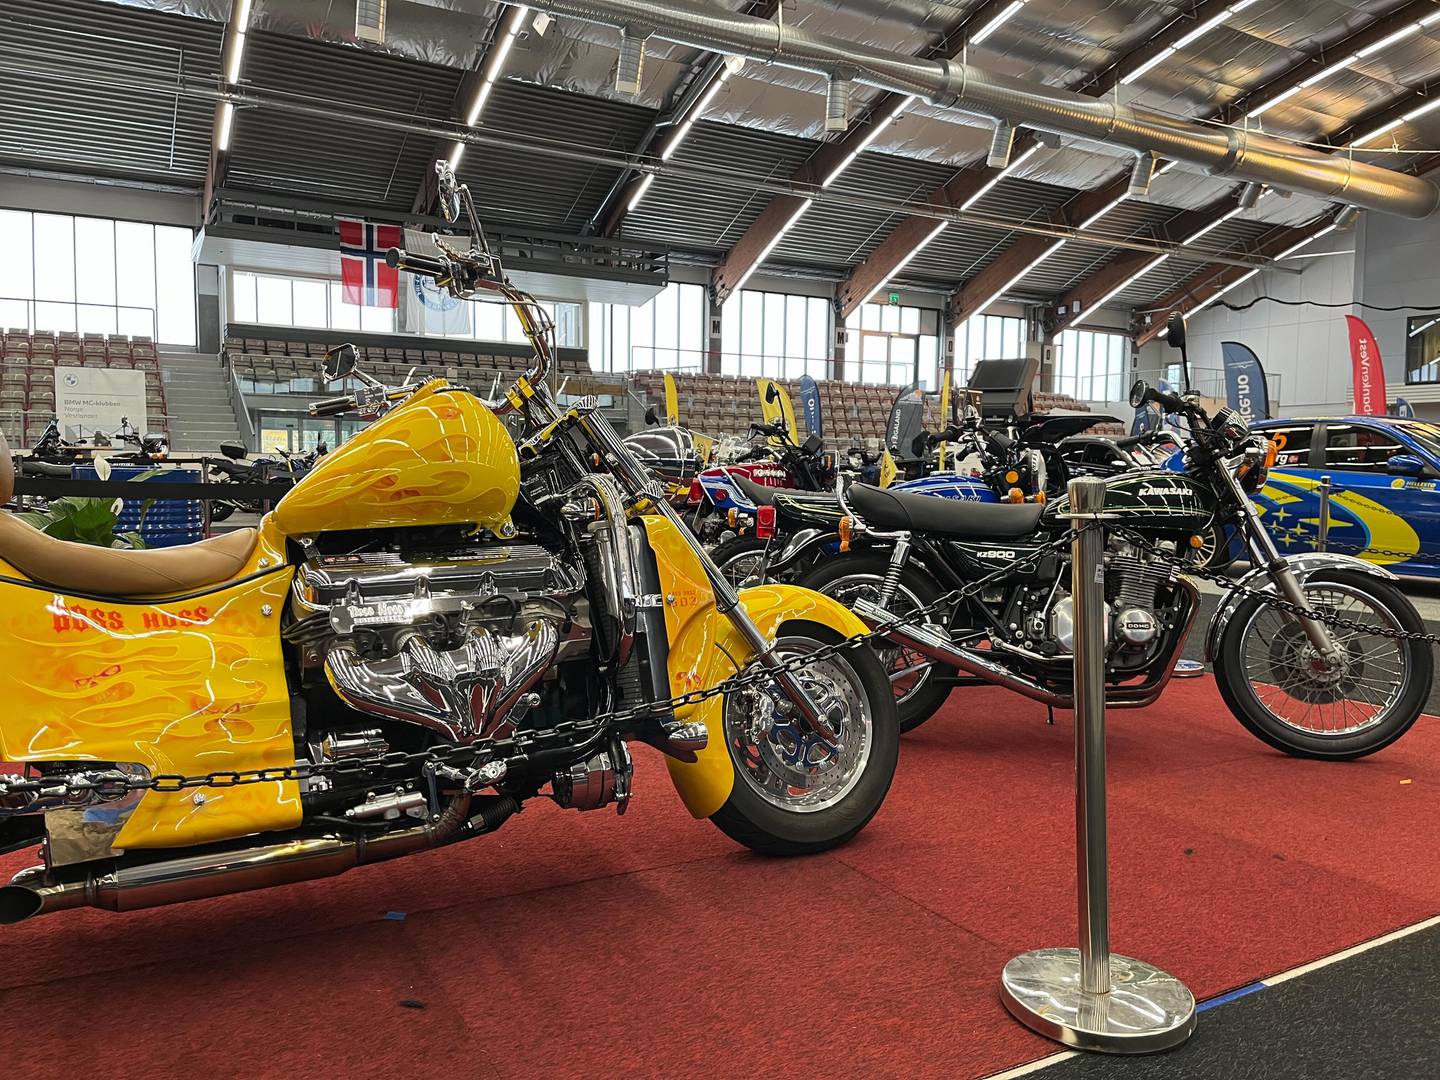 Motorsykler og firhjulinger har også fått plass på messegulvet under Autopia Expo, som først og fremst er en motormesse.